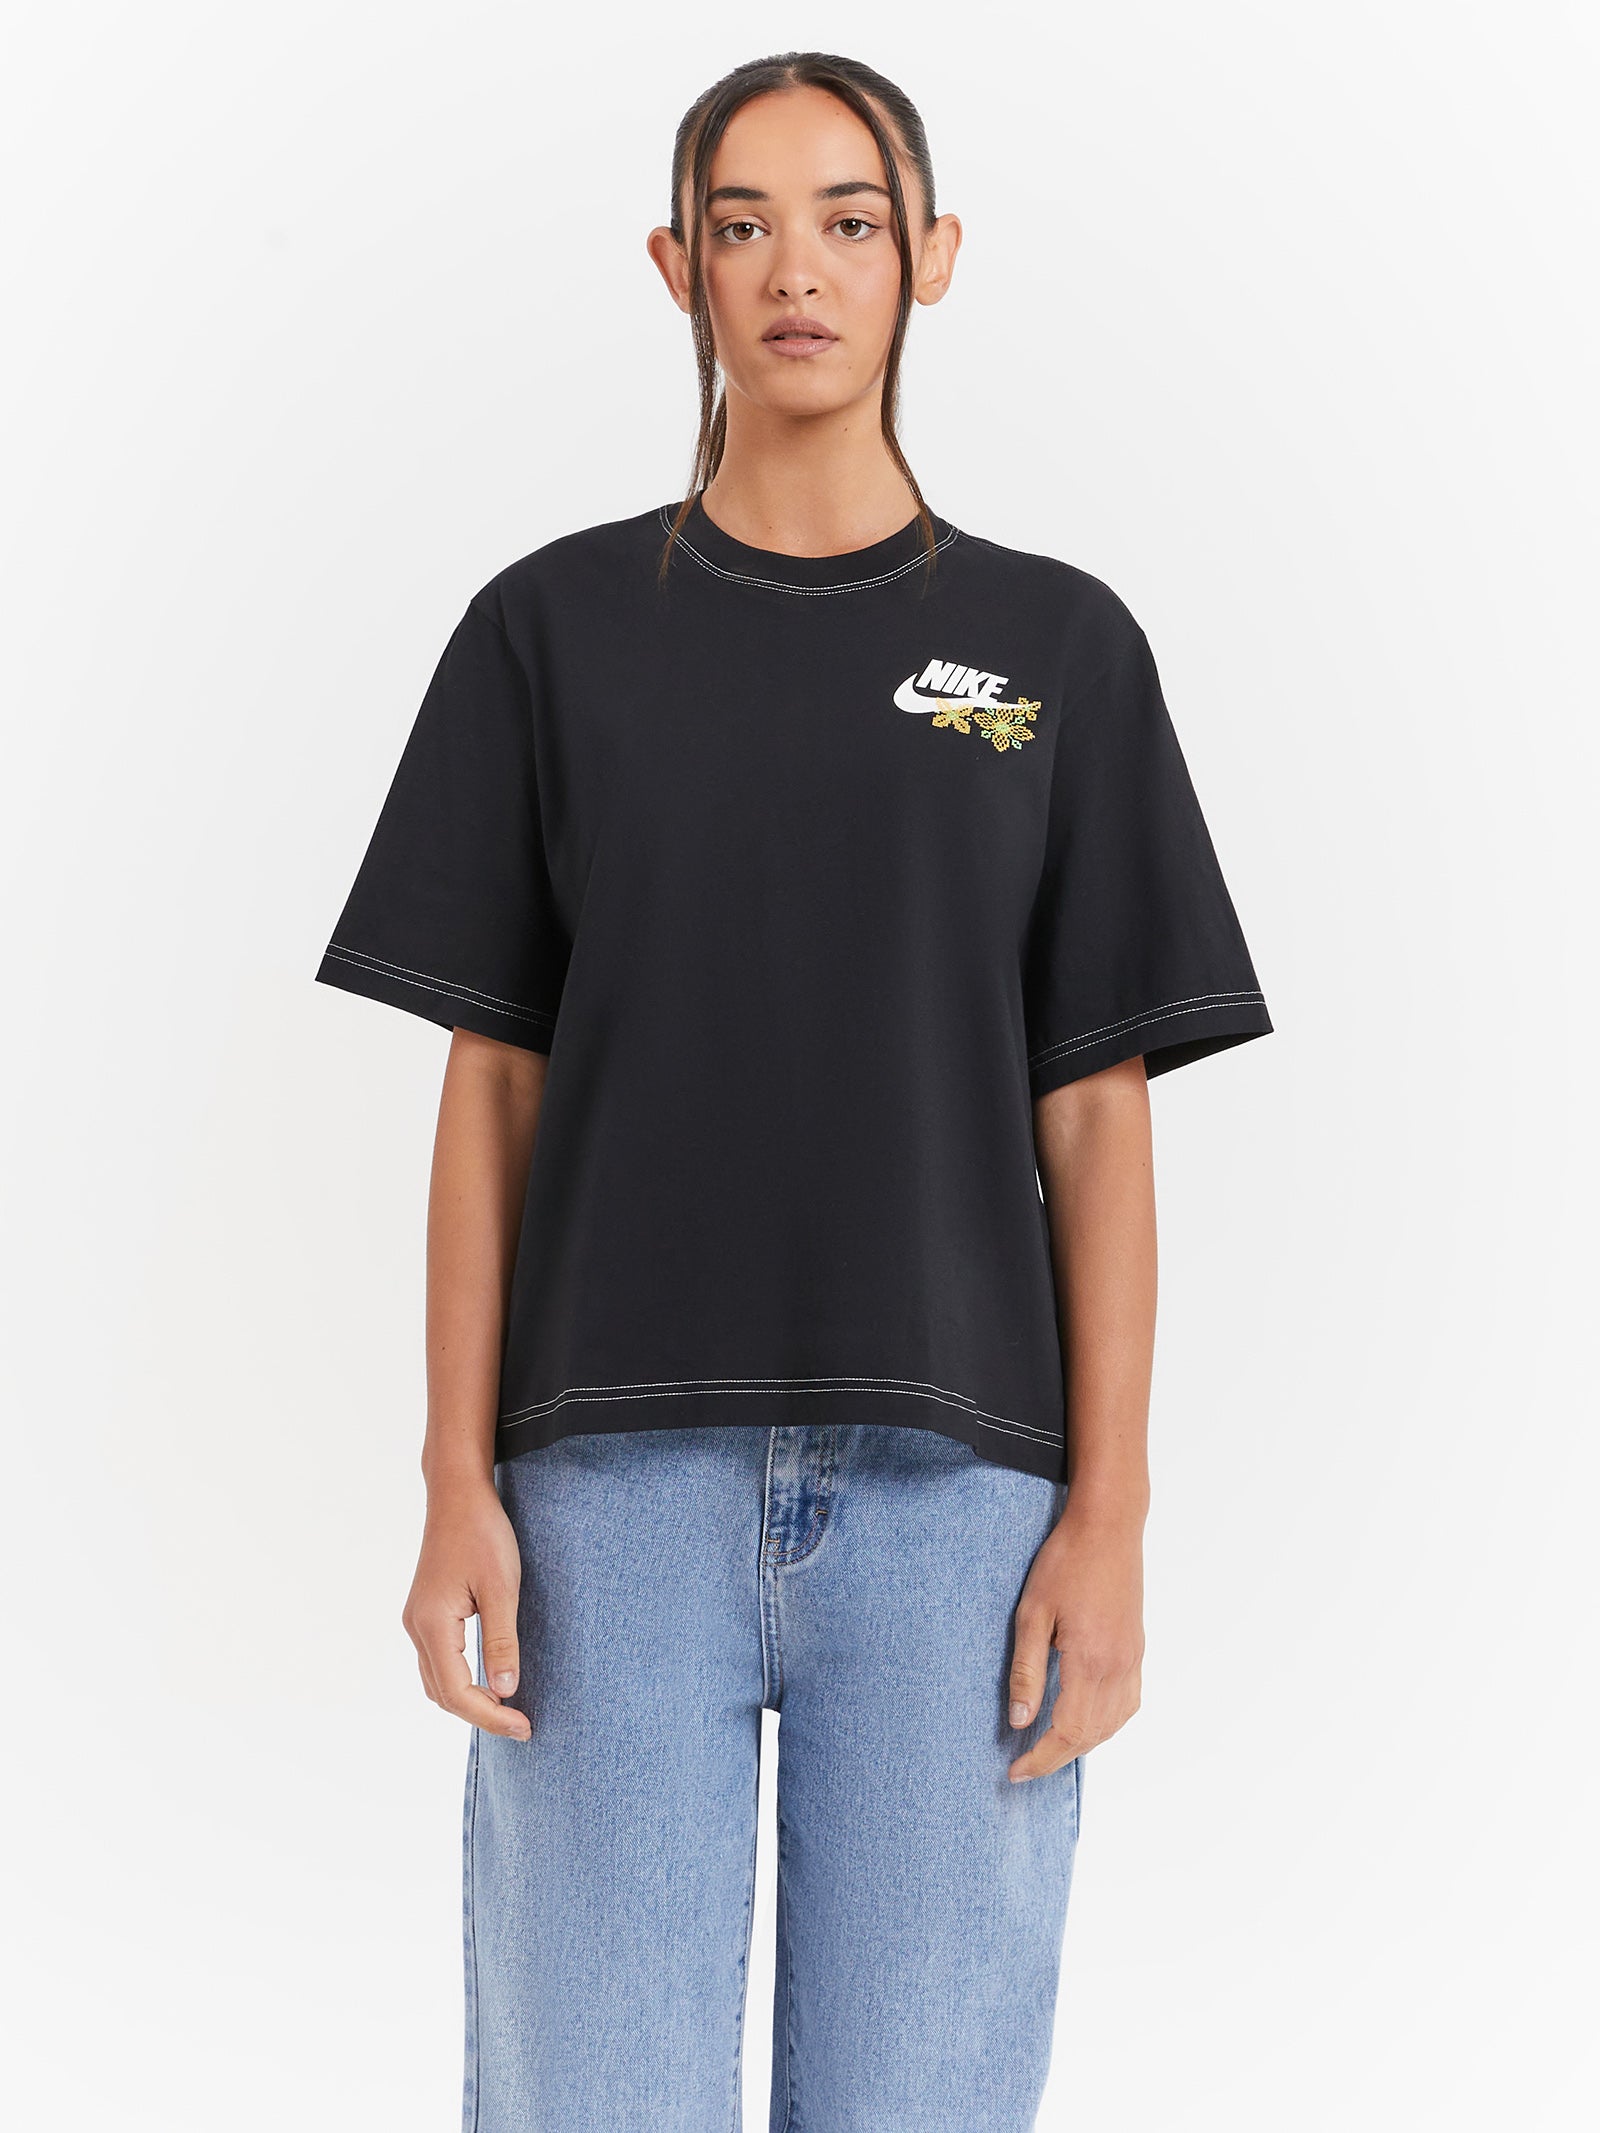 Short in Sportswear - Boxy OC1 Glue Store Black Sleeve T-Shirt